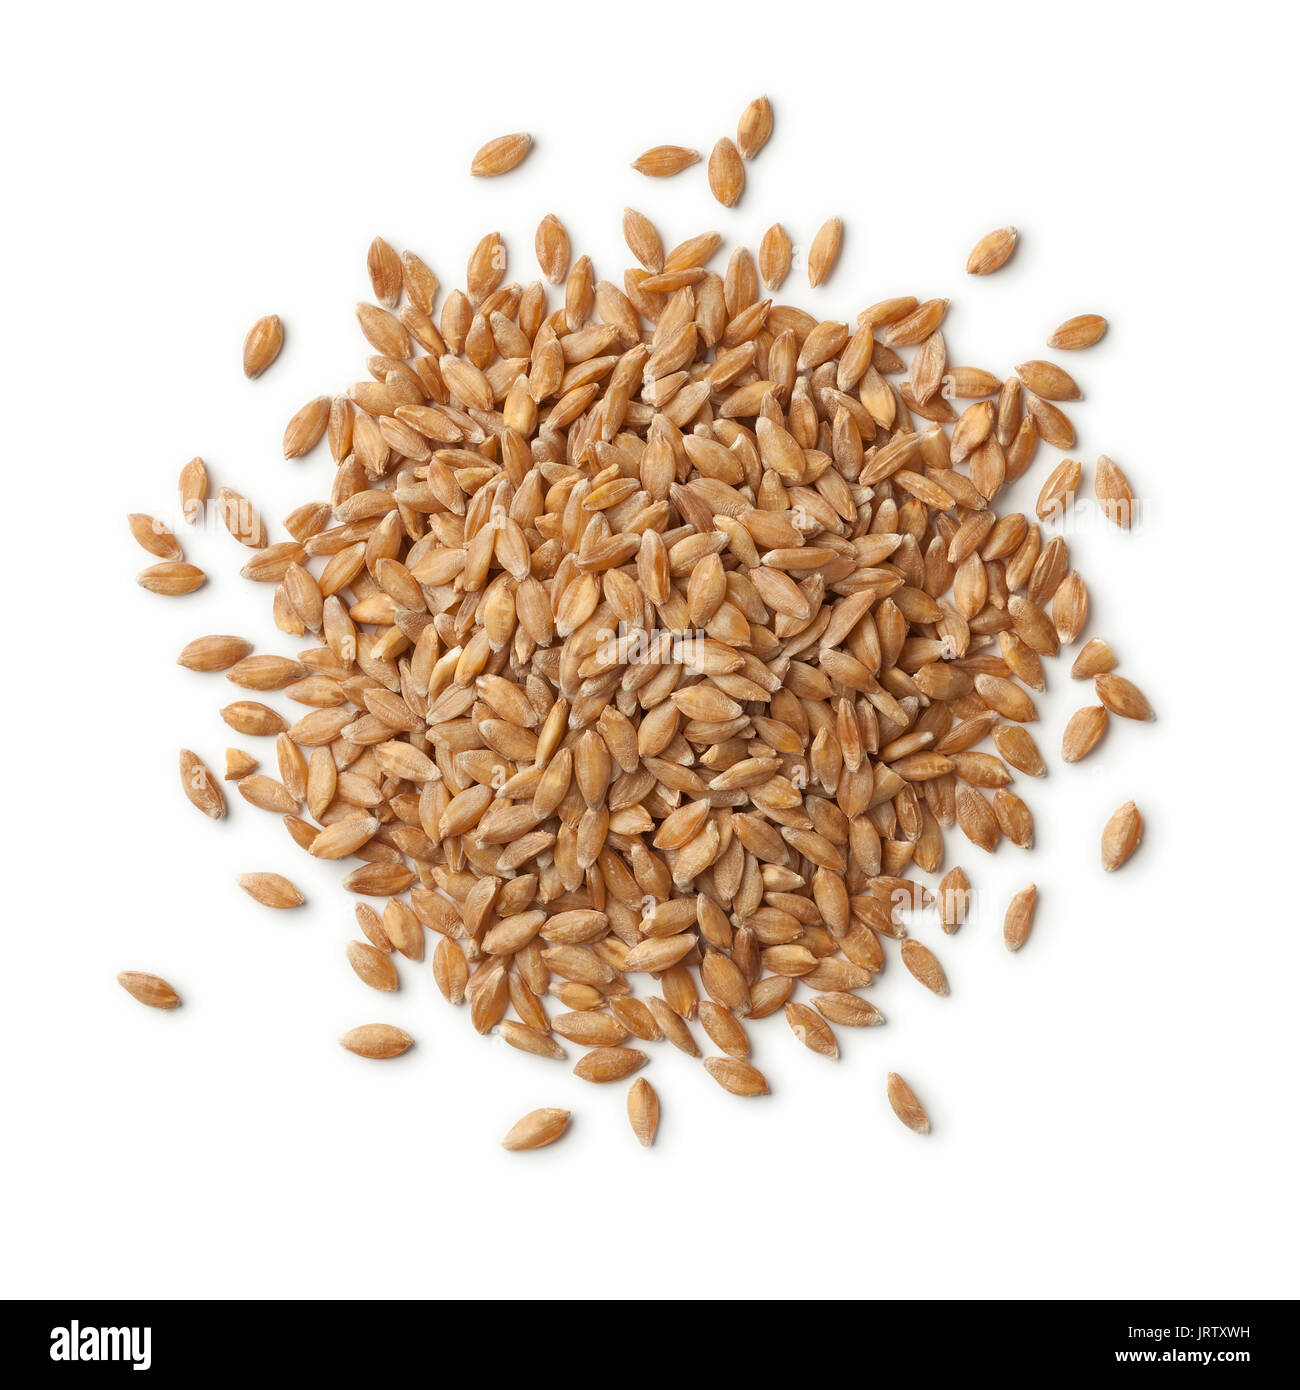 Heap of organic Einkorn wheat seeds on white background Stock Photo